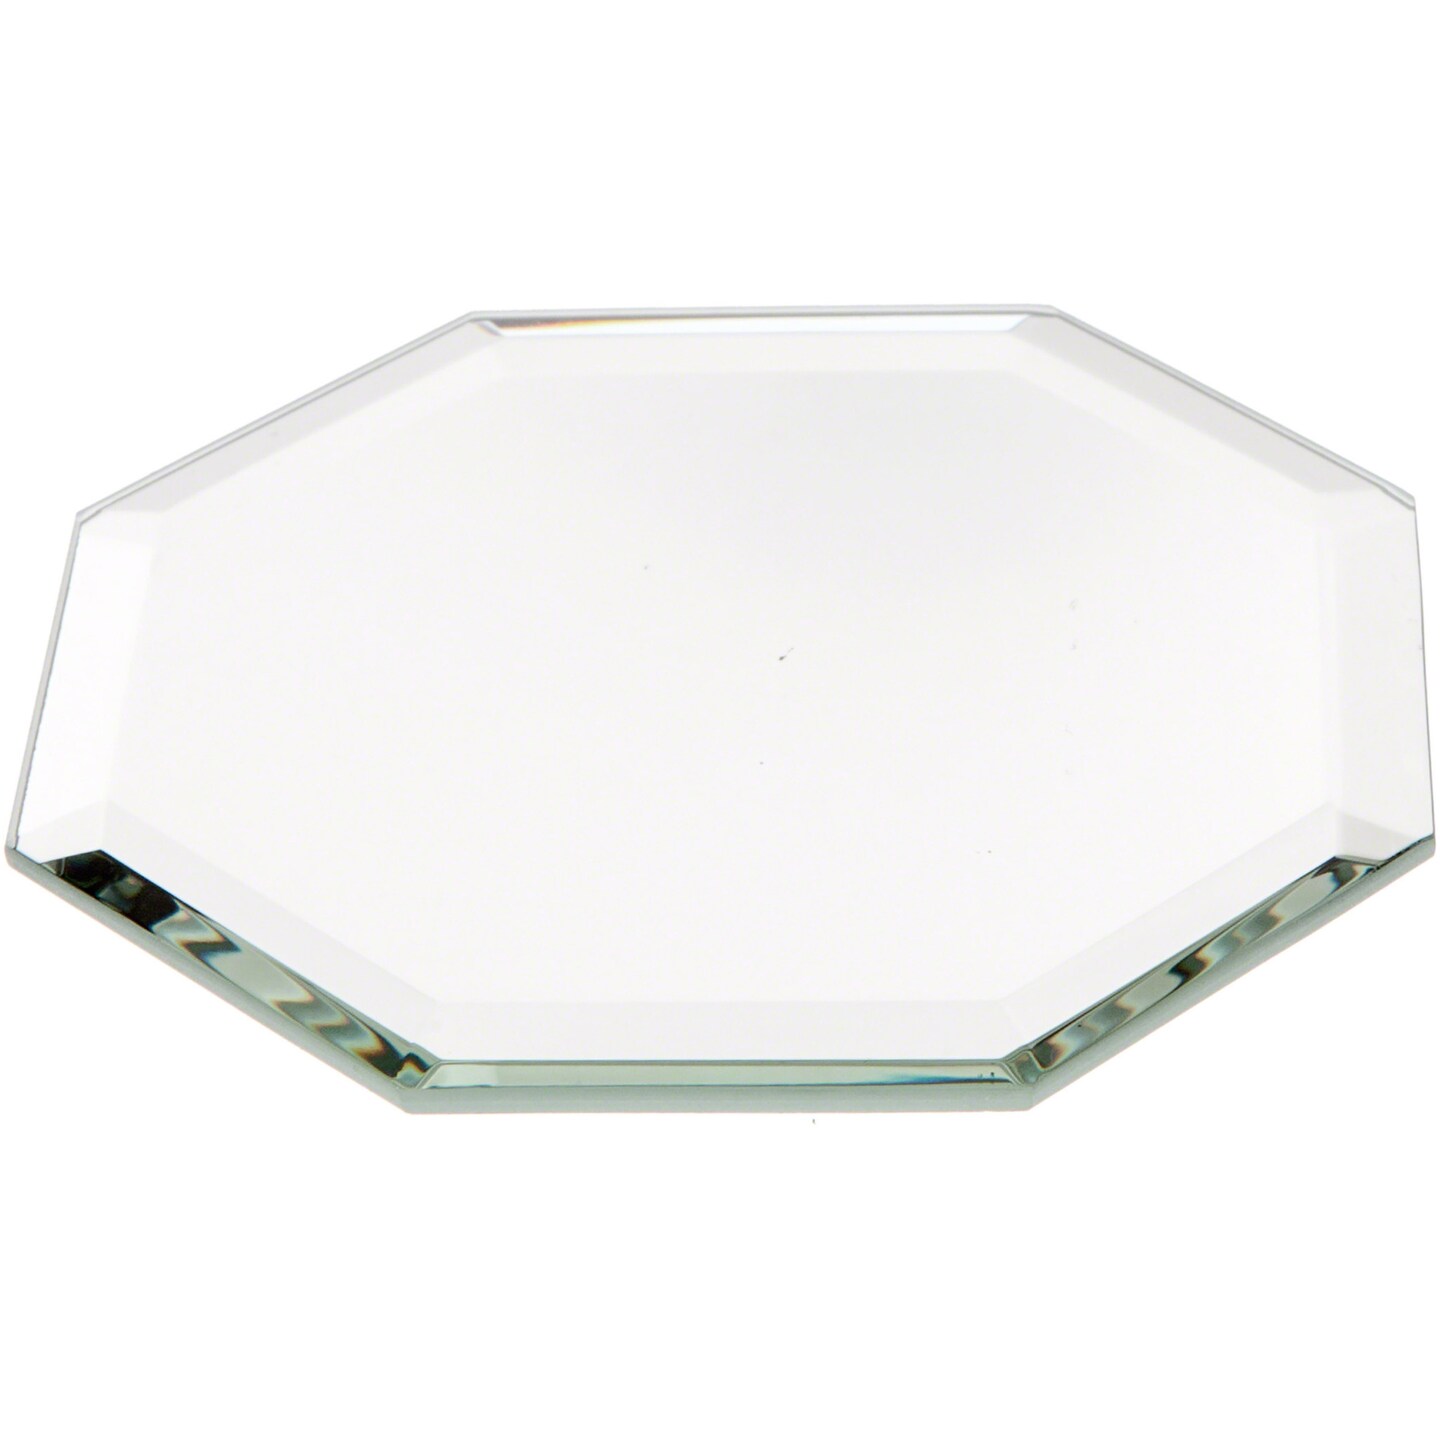 Plymor Octagon 3mm Beveled Glass Mirror, 3 inch x 3 inch